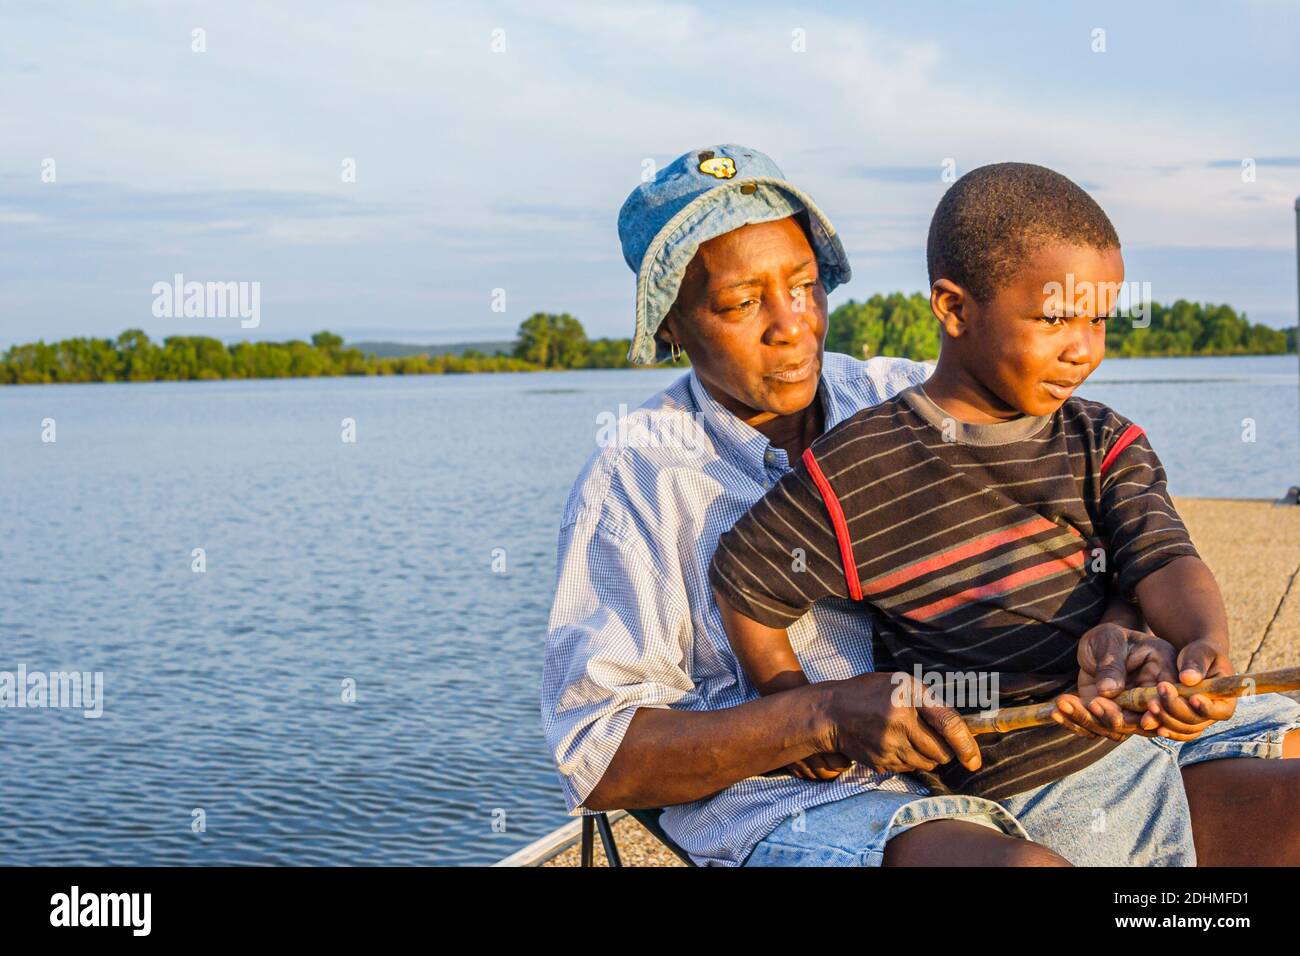 Alabama Lake Eufaula Lakepoint Resort State Park, Chattahoochee río humedal hábitat de tierras altas, niño negro abuela nieto pesca, Foto de stock